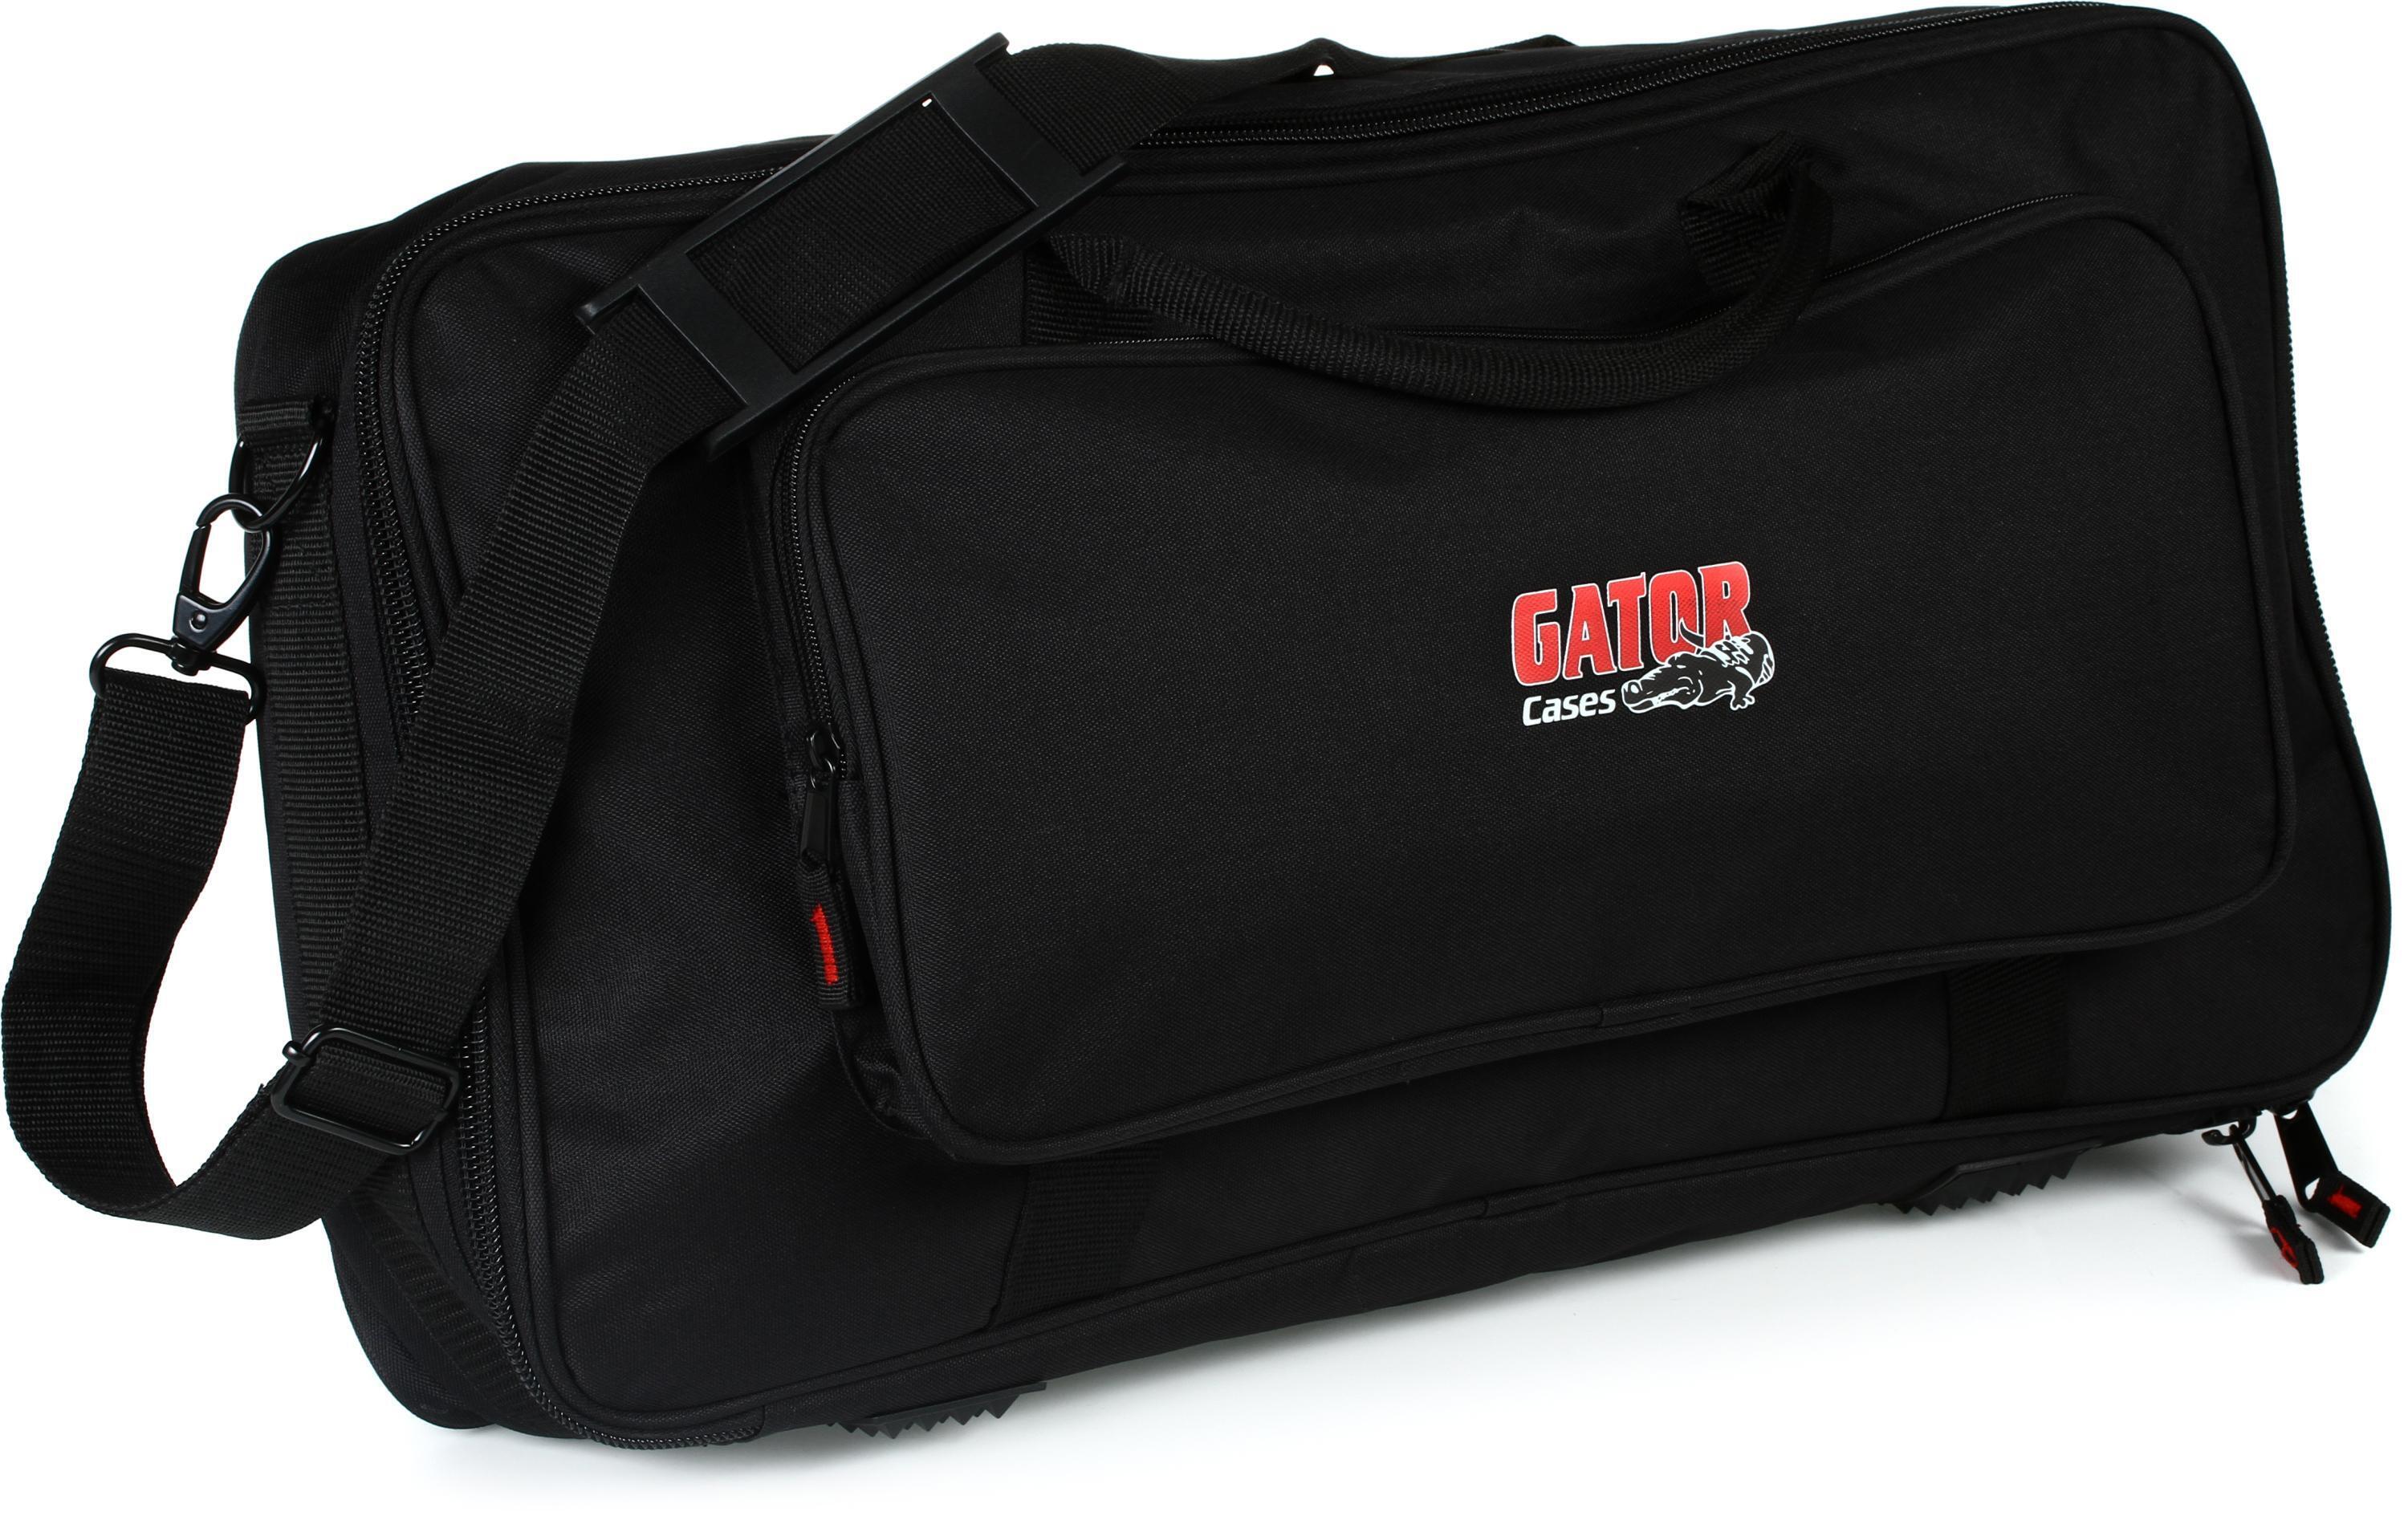 Gator GK 2110 Soft bag Korg Micro, and Multi FX pedal board bag